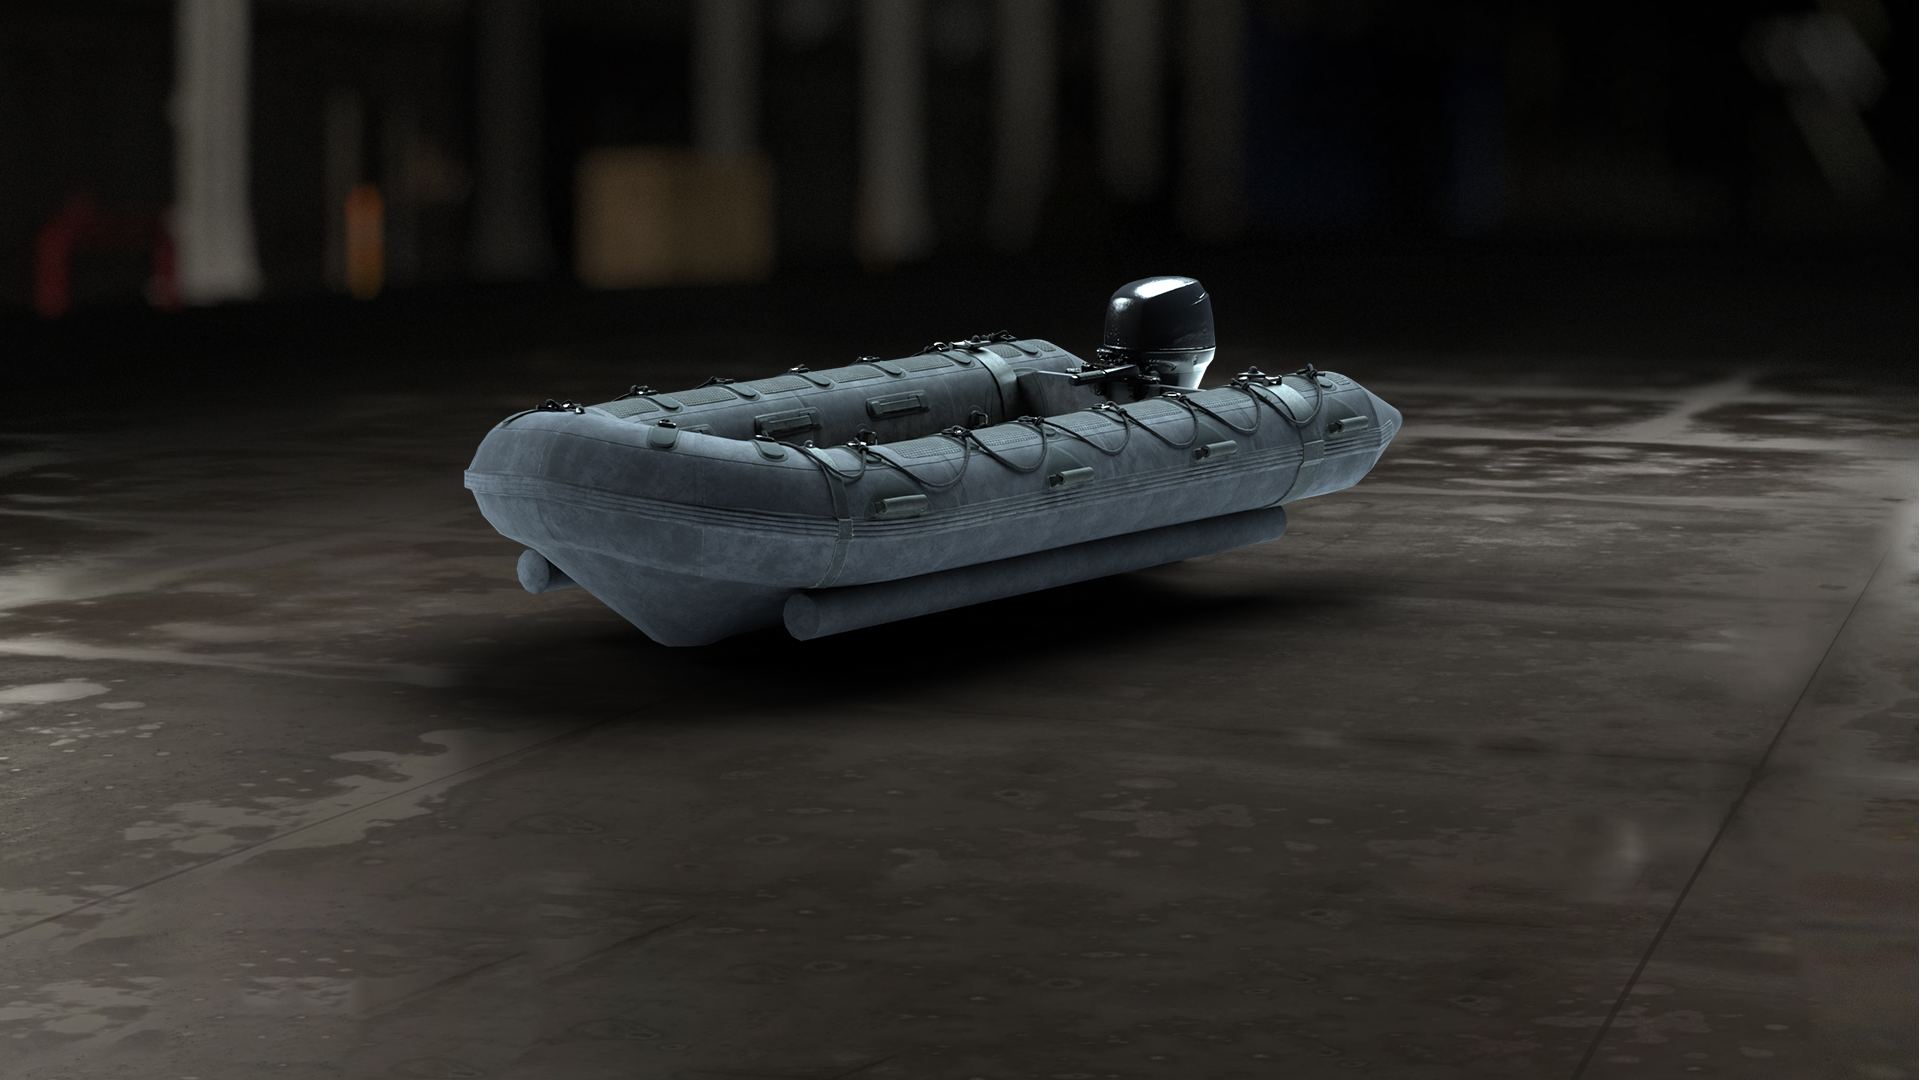 Modern Warfare 2 Vehicles: The RHIB can be seen